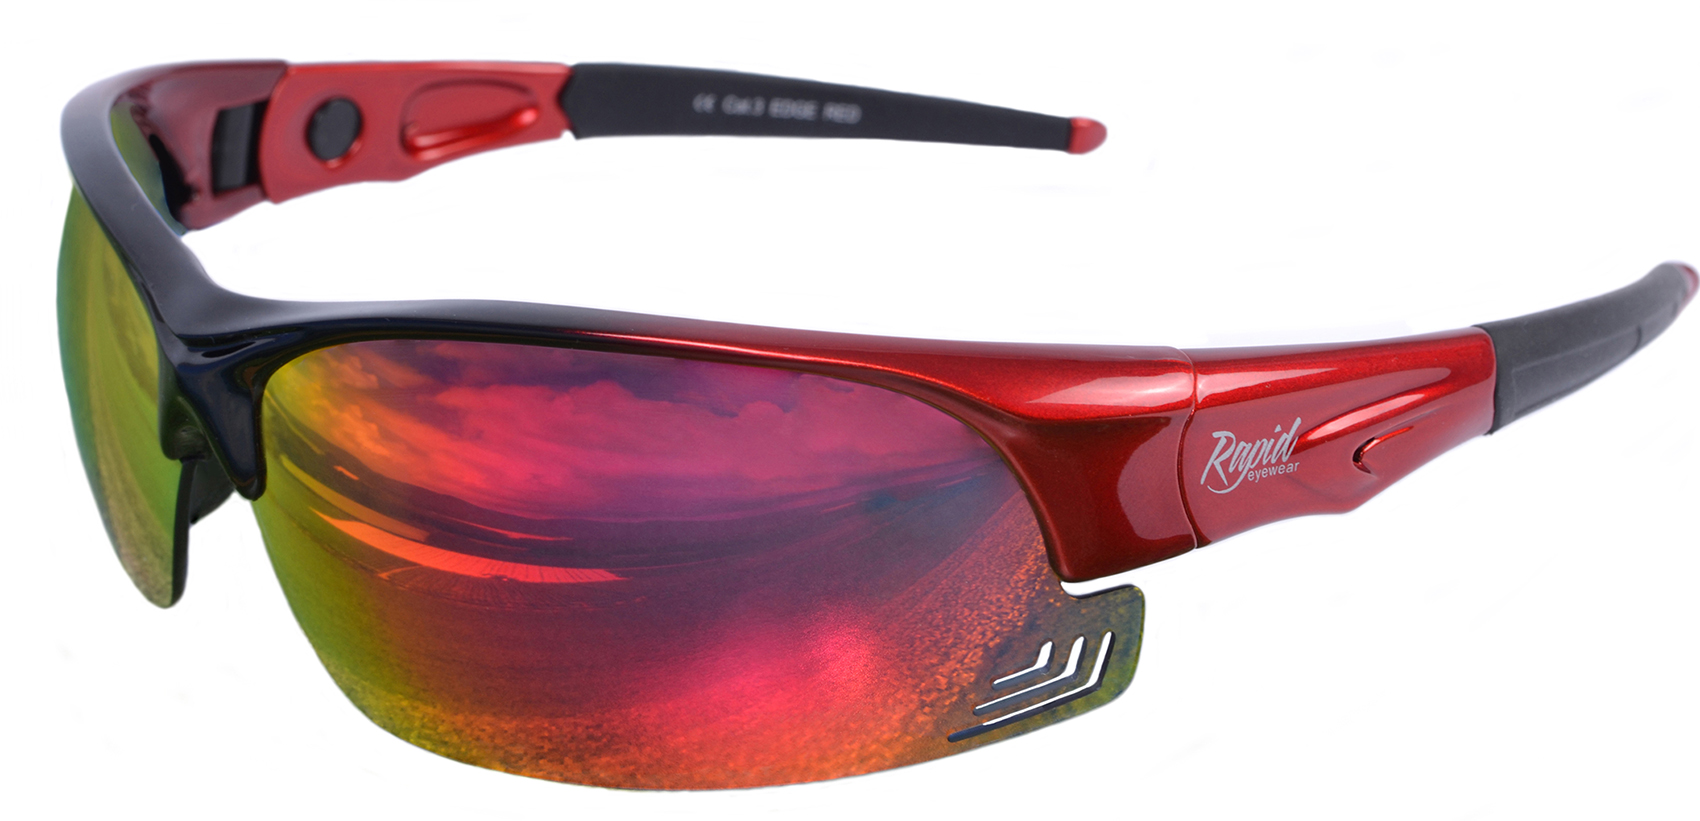 Red sunglasses for athletics moto mirrored lenses